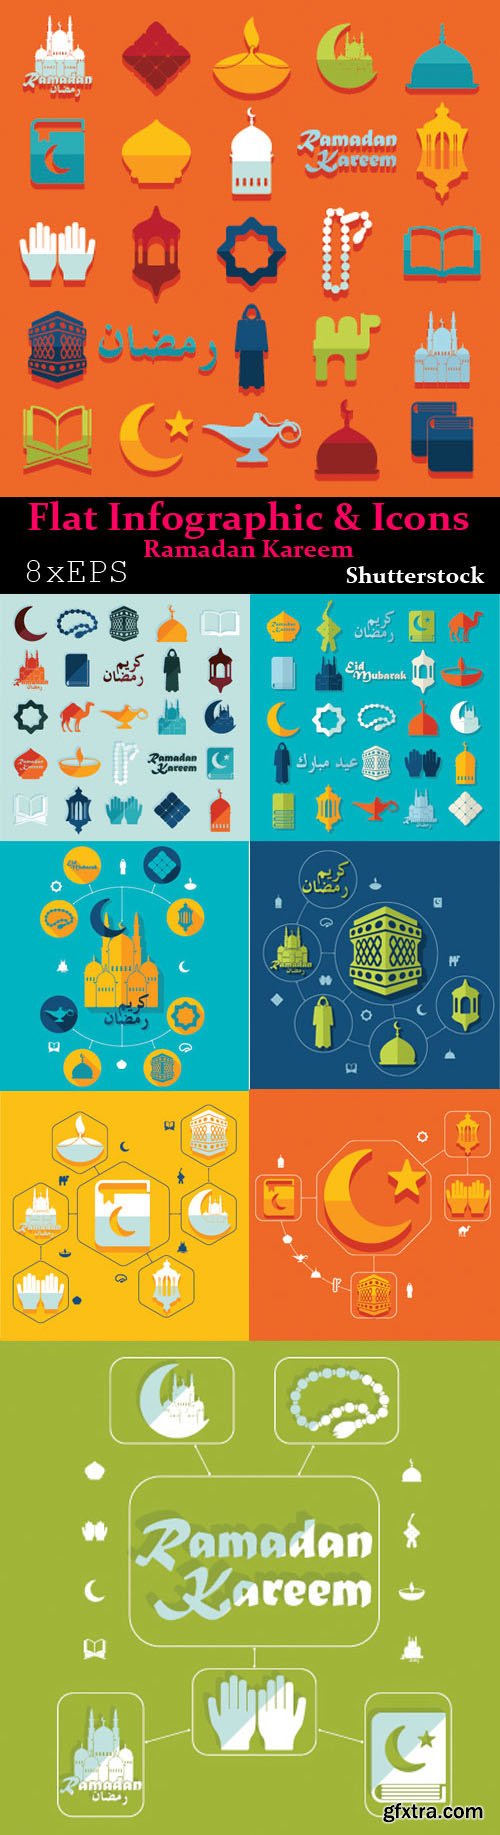 Flat Infographic & Icons - Ramadan Kareem